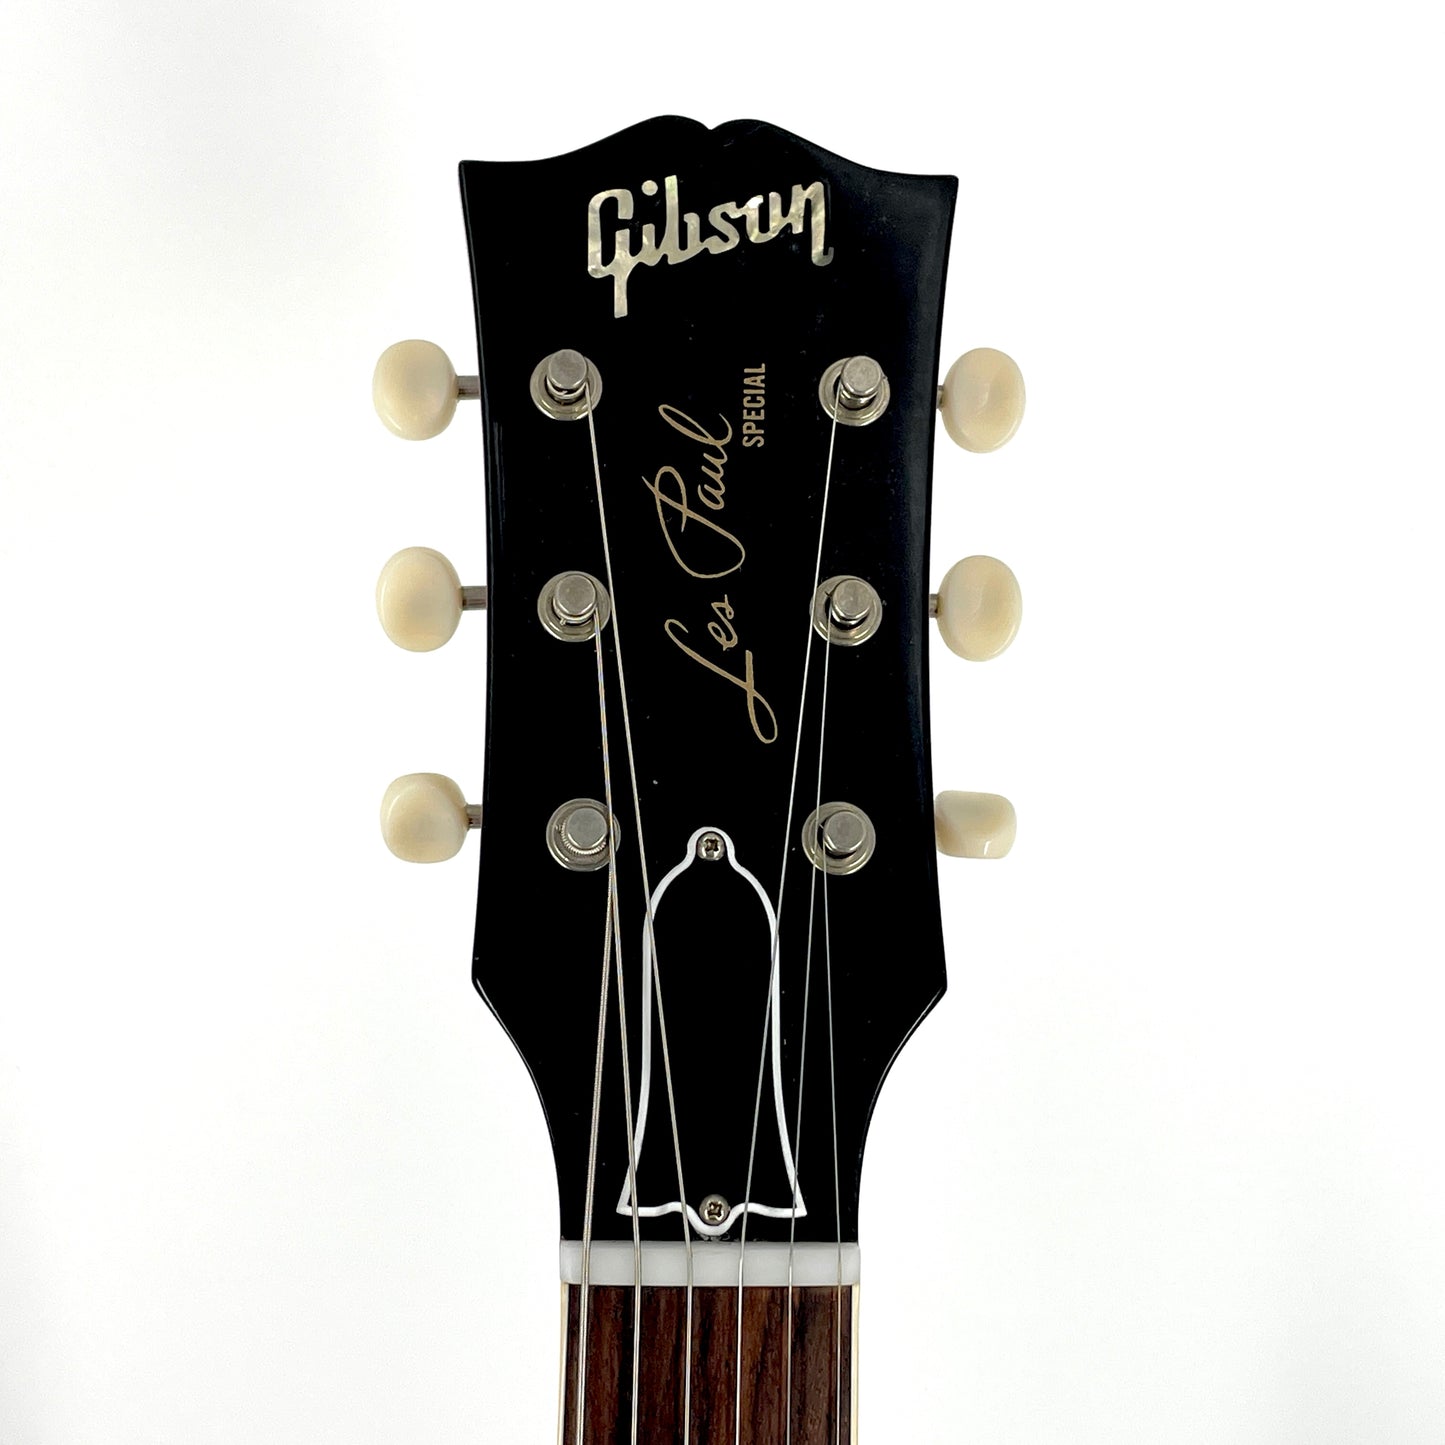 2011 Gibson Custom Shop Les Paul Special DC 1960 Reissue VOS – Cherry